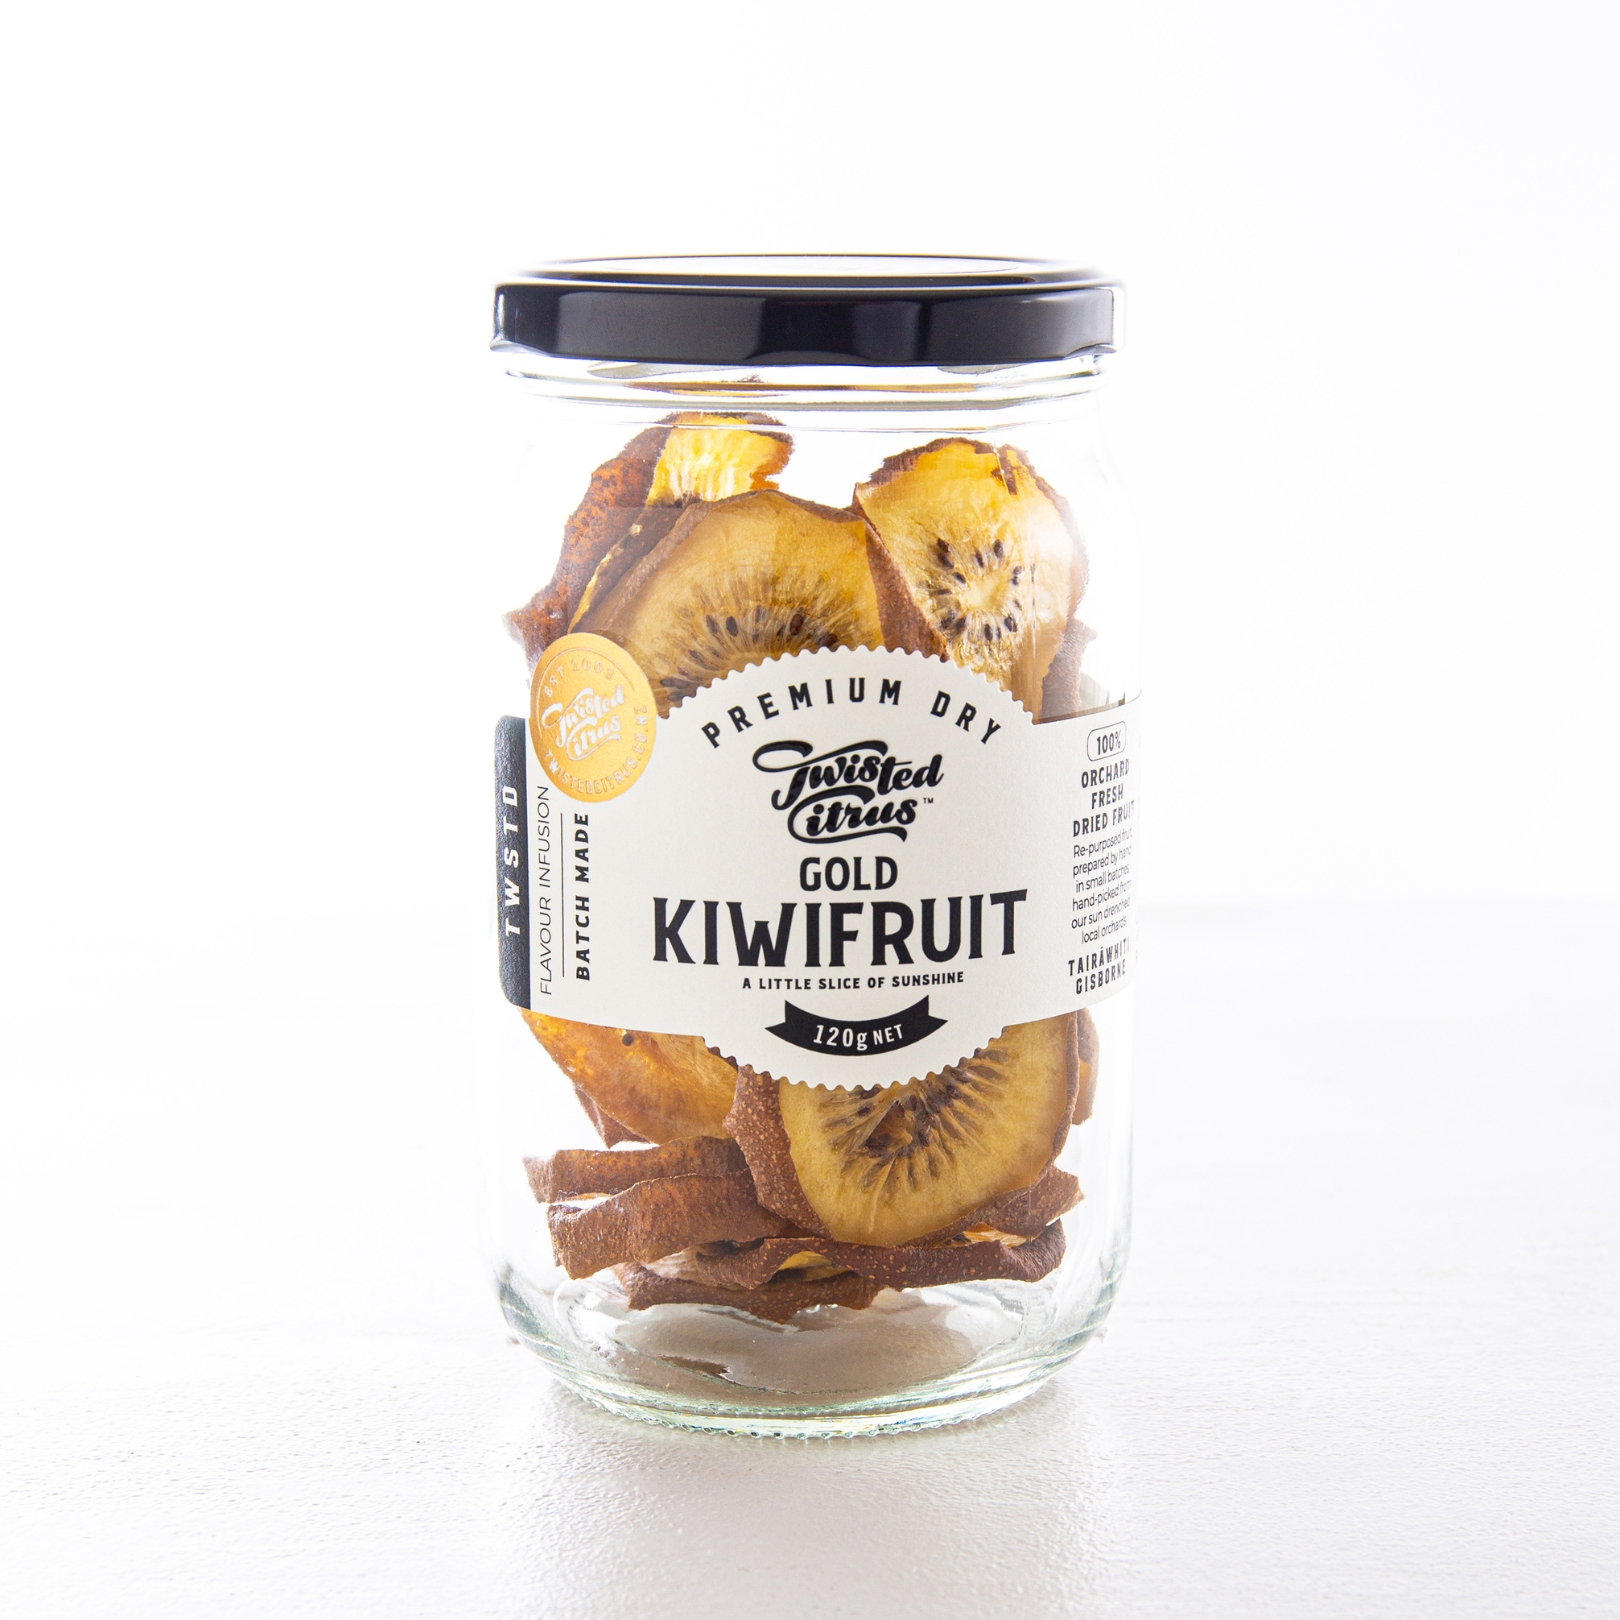 Buy Twisted Dried Fruit - Gold Kiwifruit Online NZ